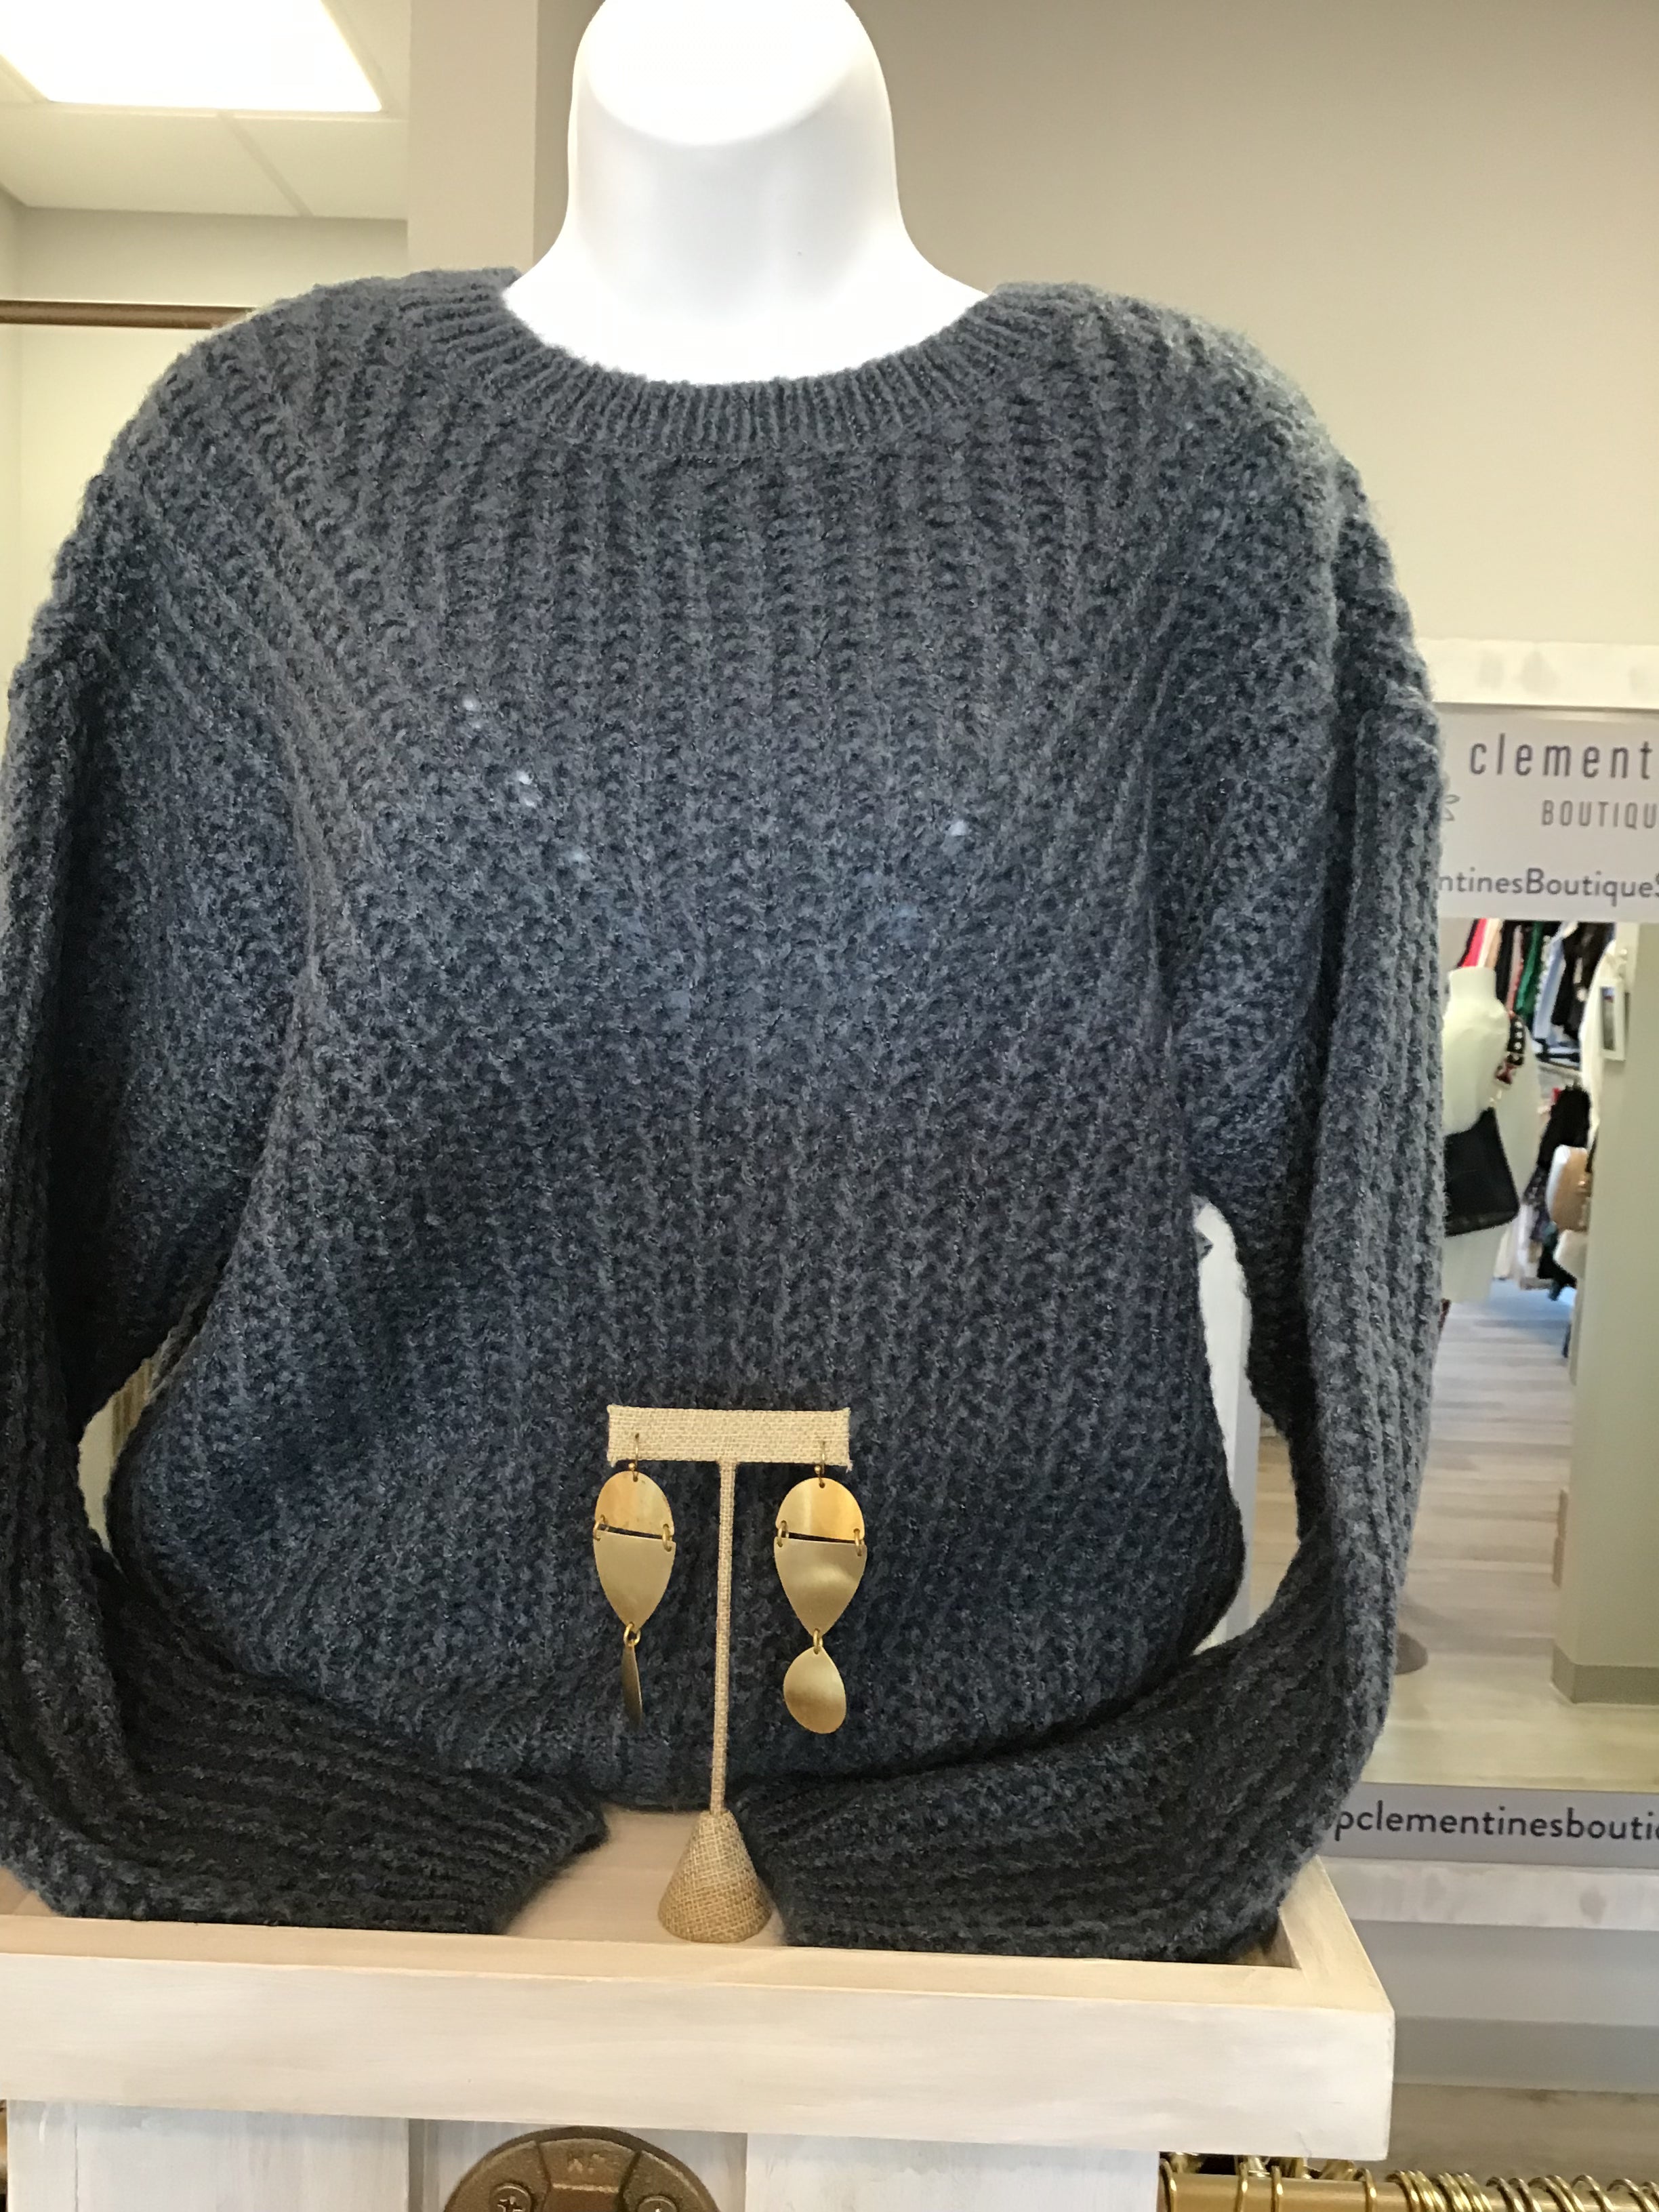 Matilda Sweater